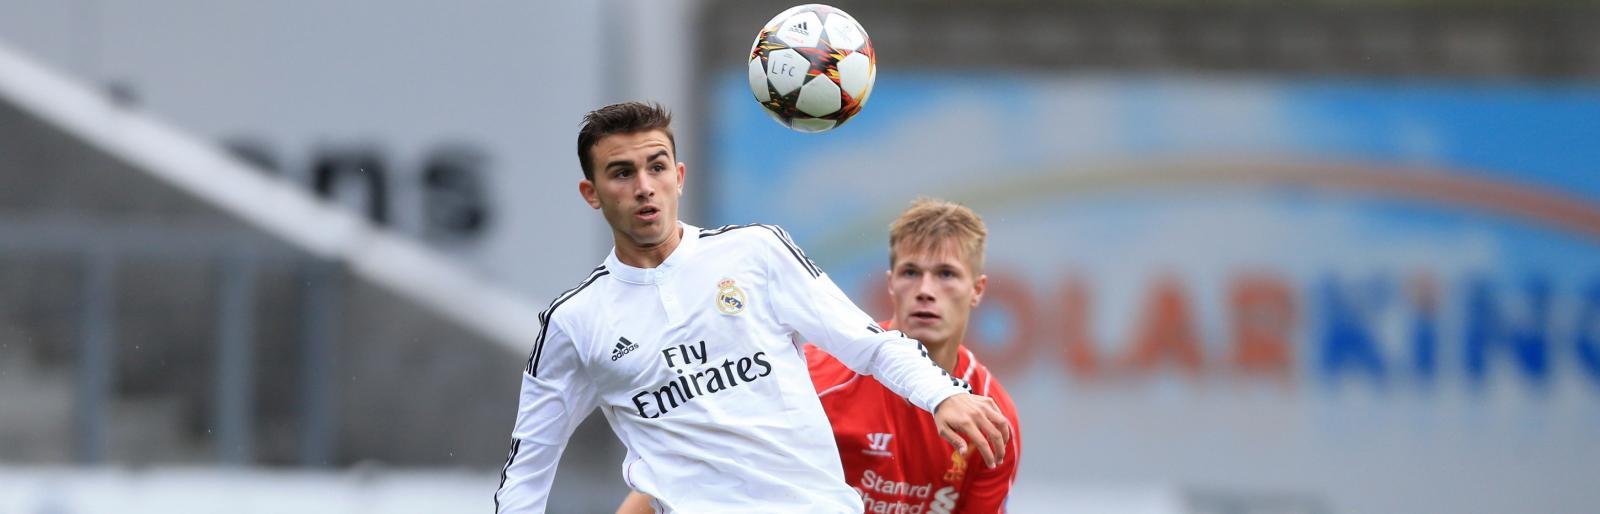 Arsenal monitoring Real Madrid’s 18-year-old starlet